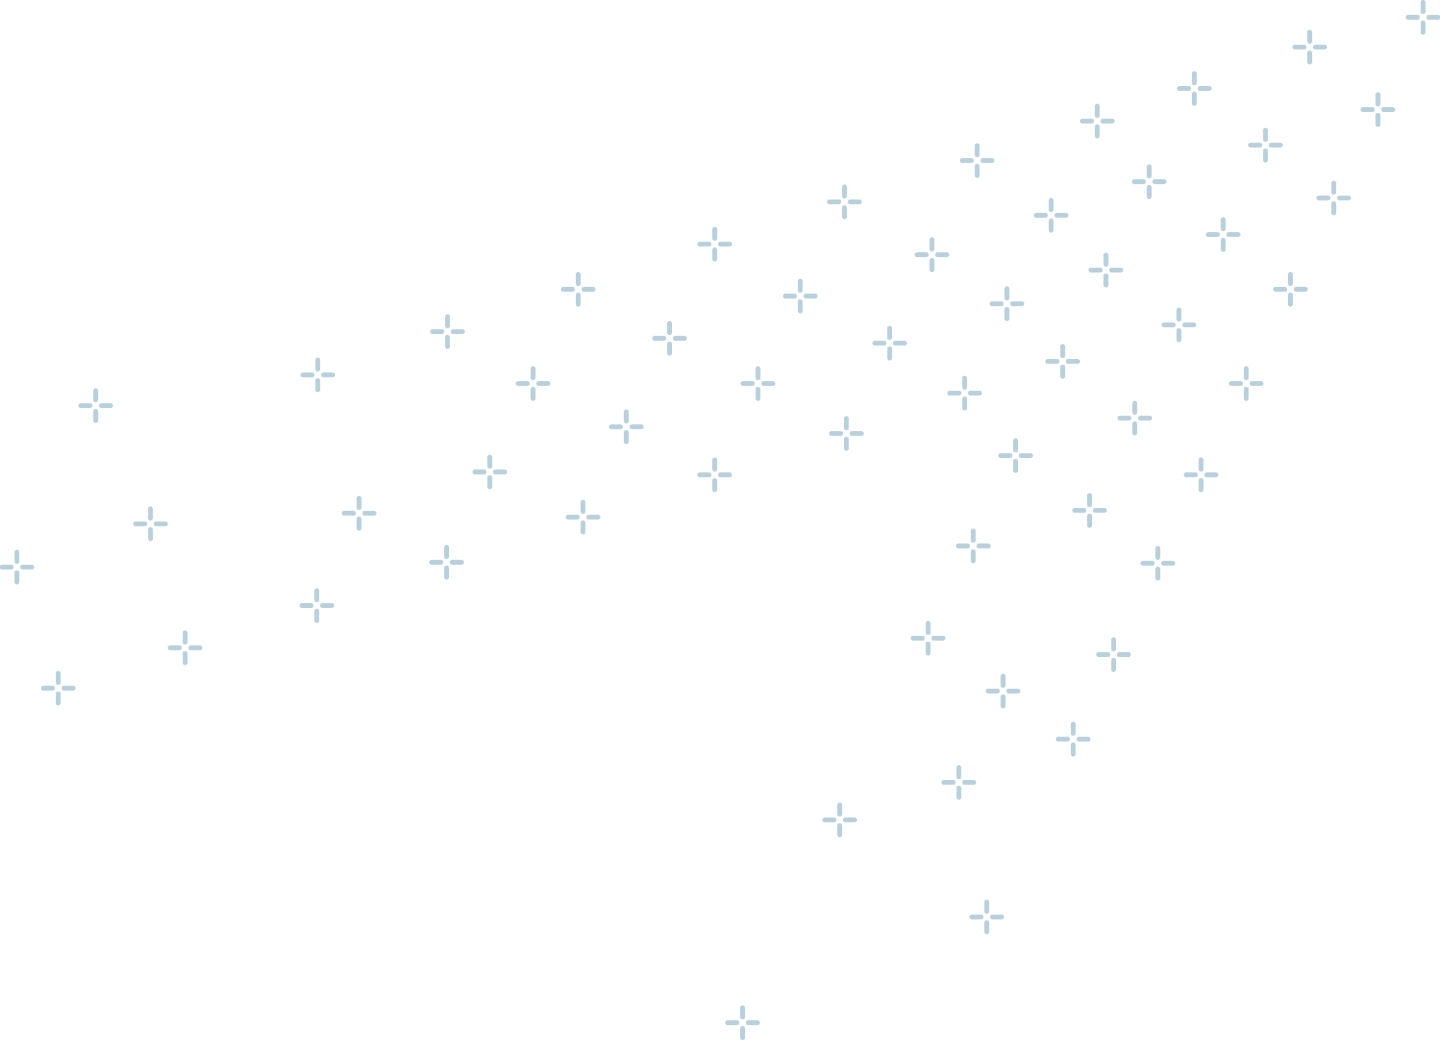 Background stars